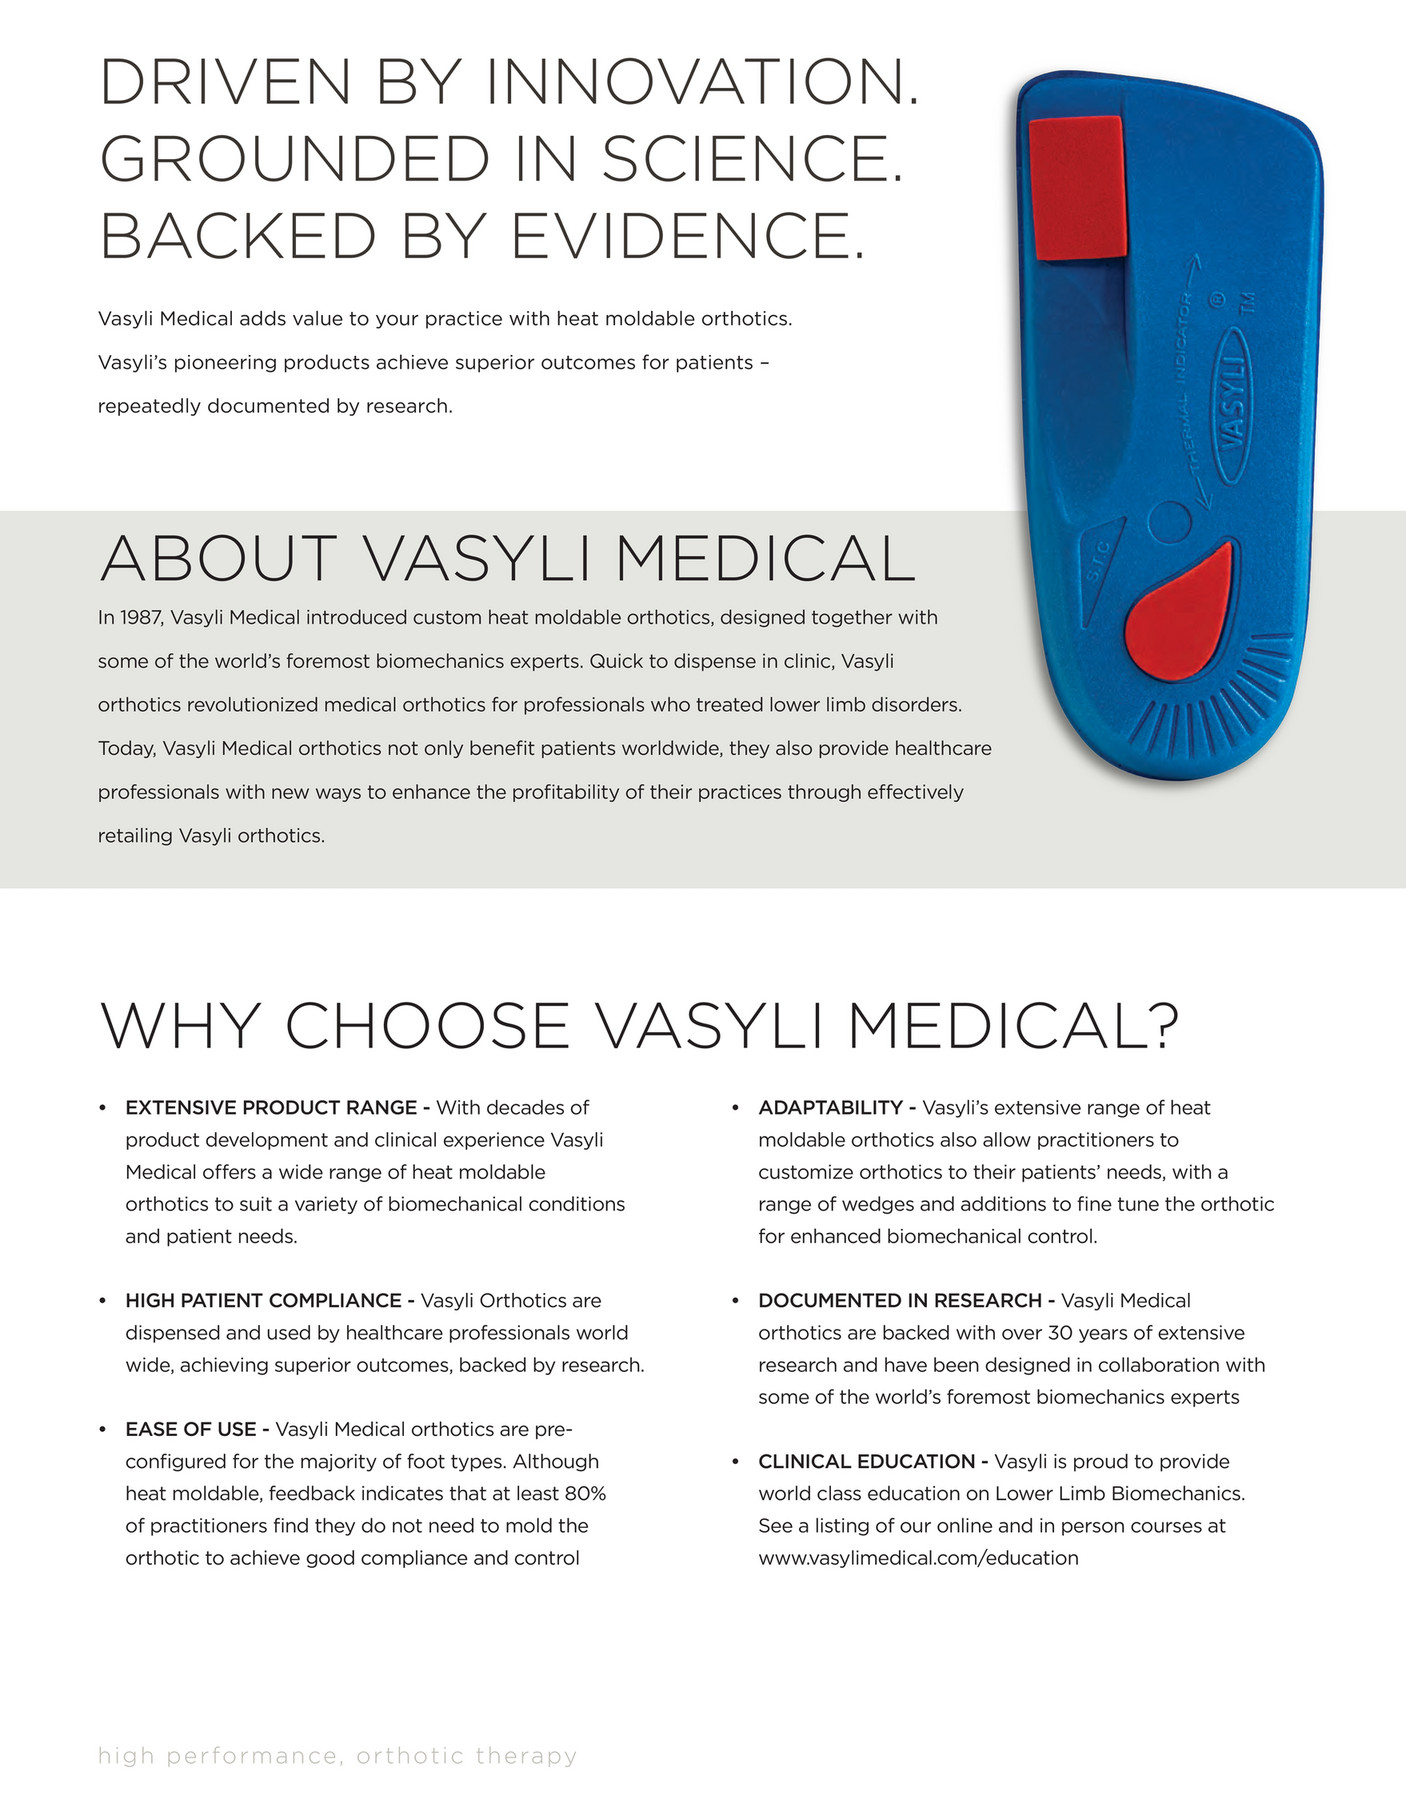 vasyli medical custom orthotics